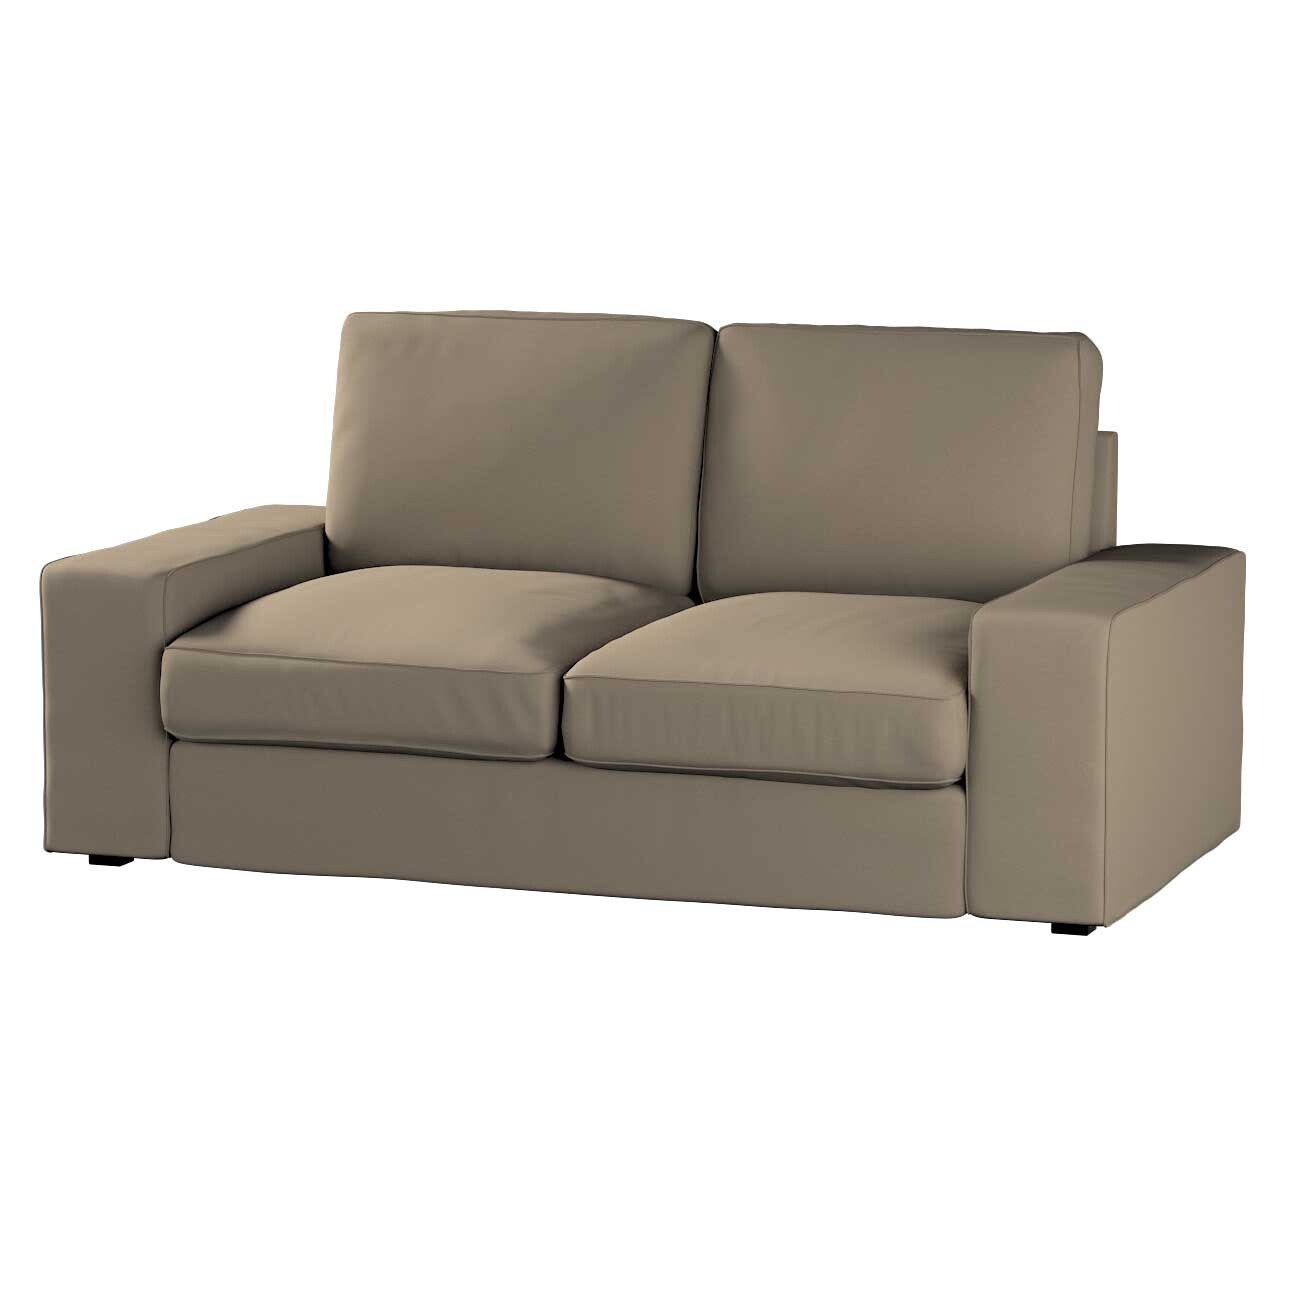 Bezug für Kivik 2-Sitzer Sofa, mokka, Bezug für Sofa Kivik 2-Sitzer, Living günstig online kaufen